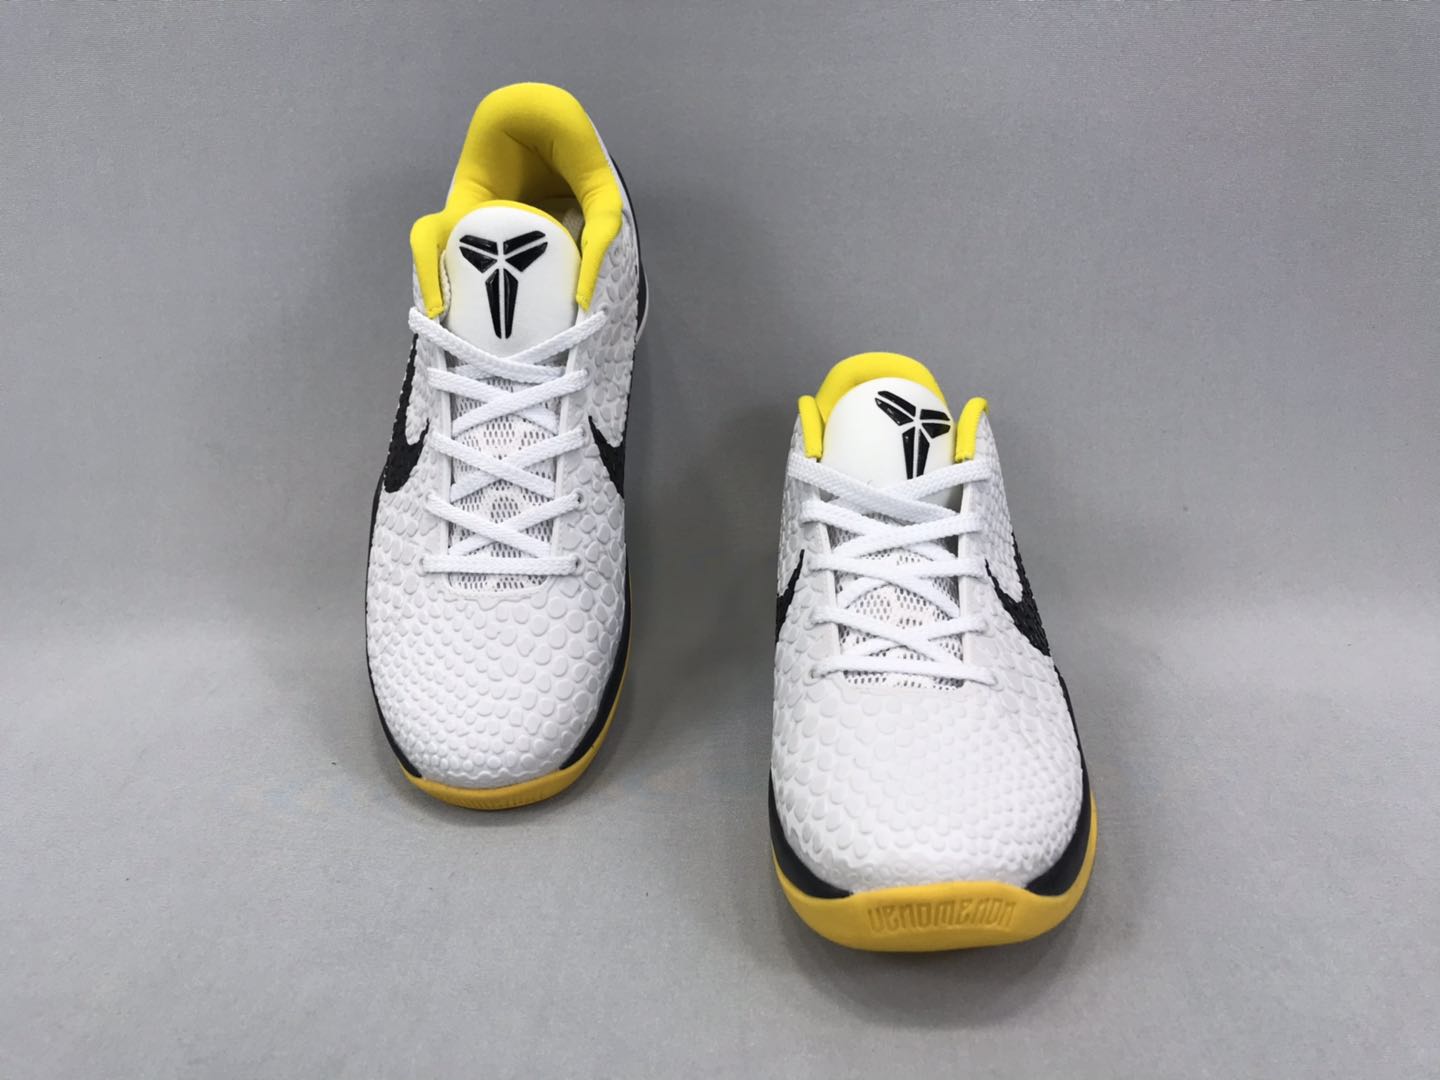 New Nike Kobe Bryant VIII White Black Yellow Shoes